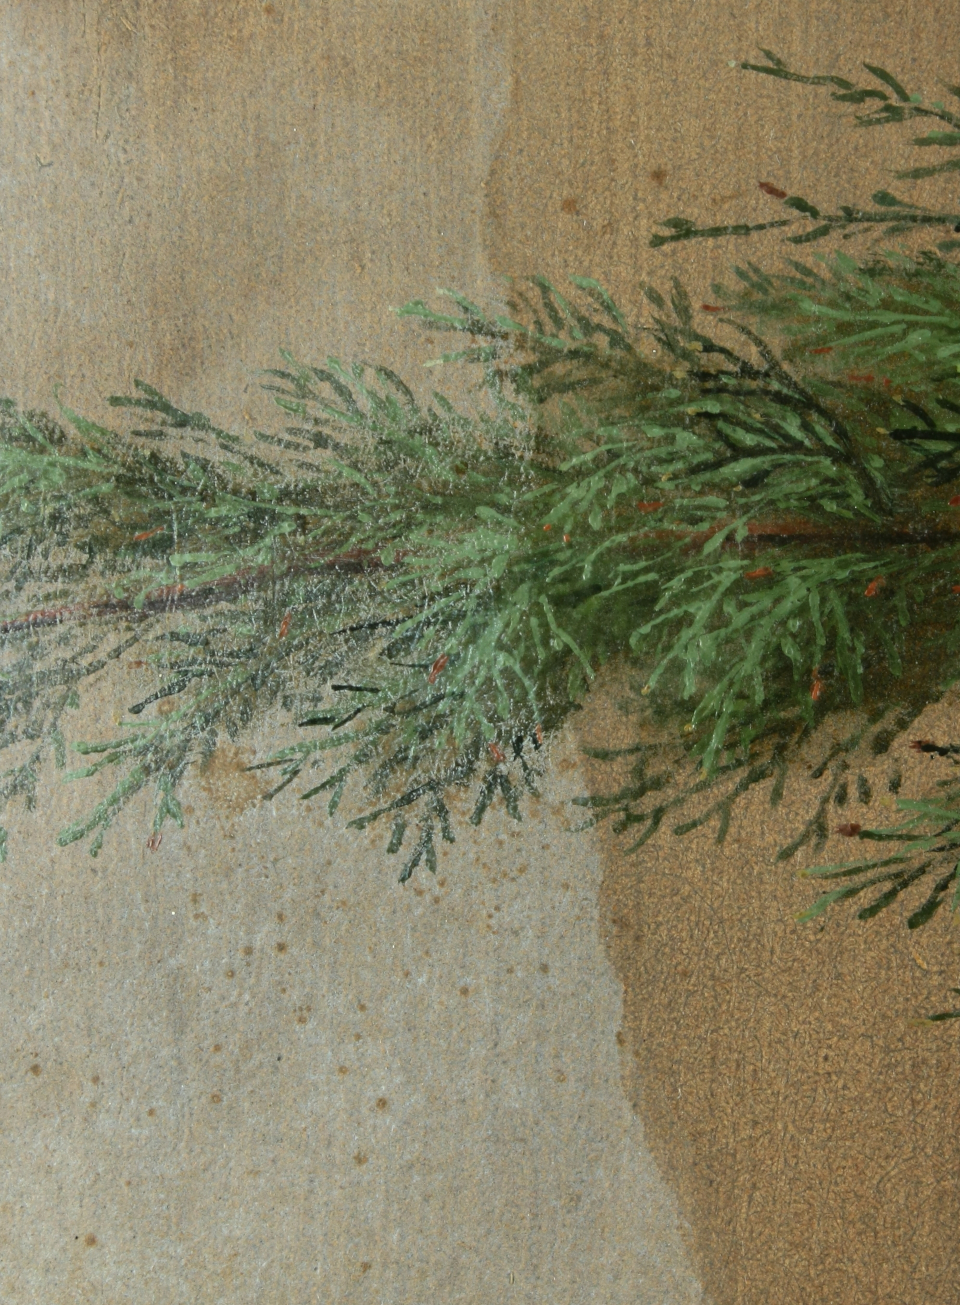 Removing whitish bloom – Adolf Senff: Cypress Branches (detail), 1848, oil on paper, 44.0 x 57.7 cm | Kulturstiftung Sachsen-Anhalt – Moritzburg Art Museum, Halle an der Saale | Photograph: Linda Haselbach